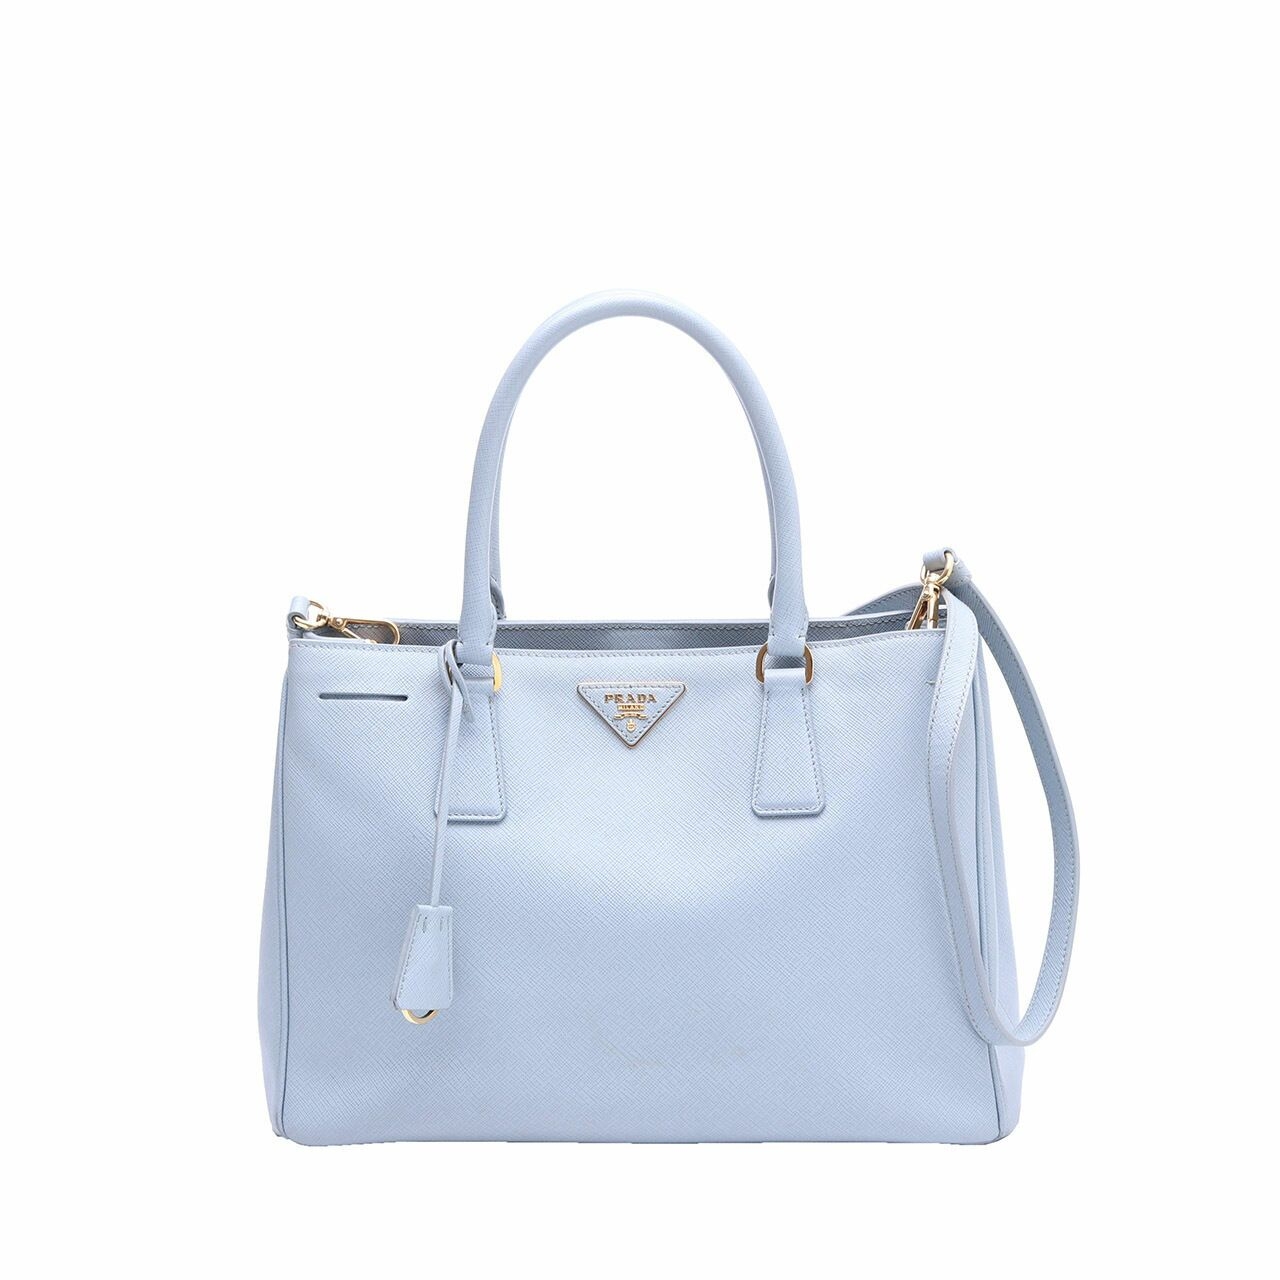 Prada Pale Blue Saffiano Lux Leather Satchel Bag